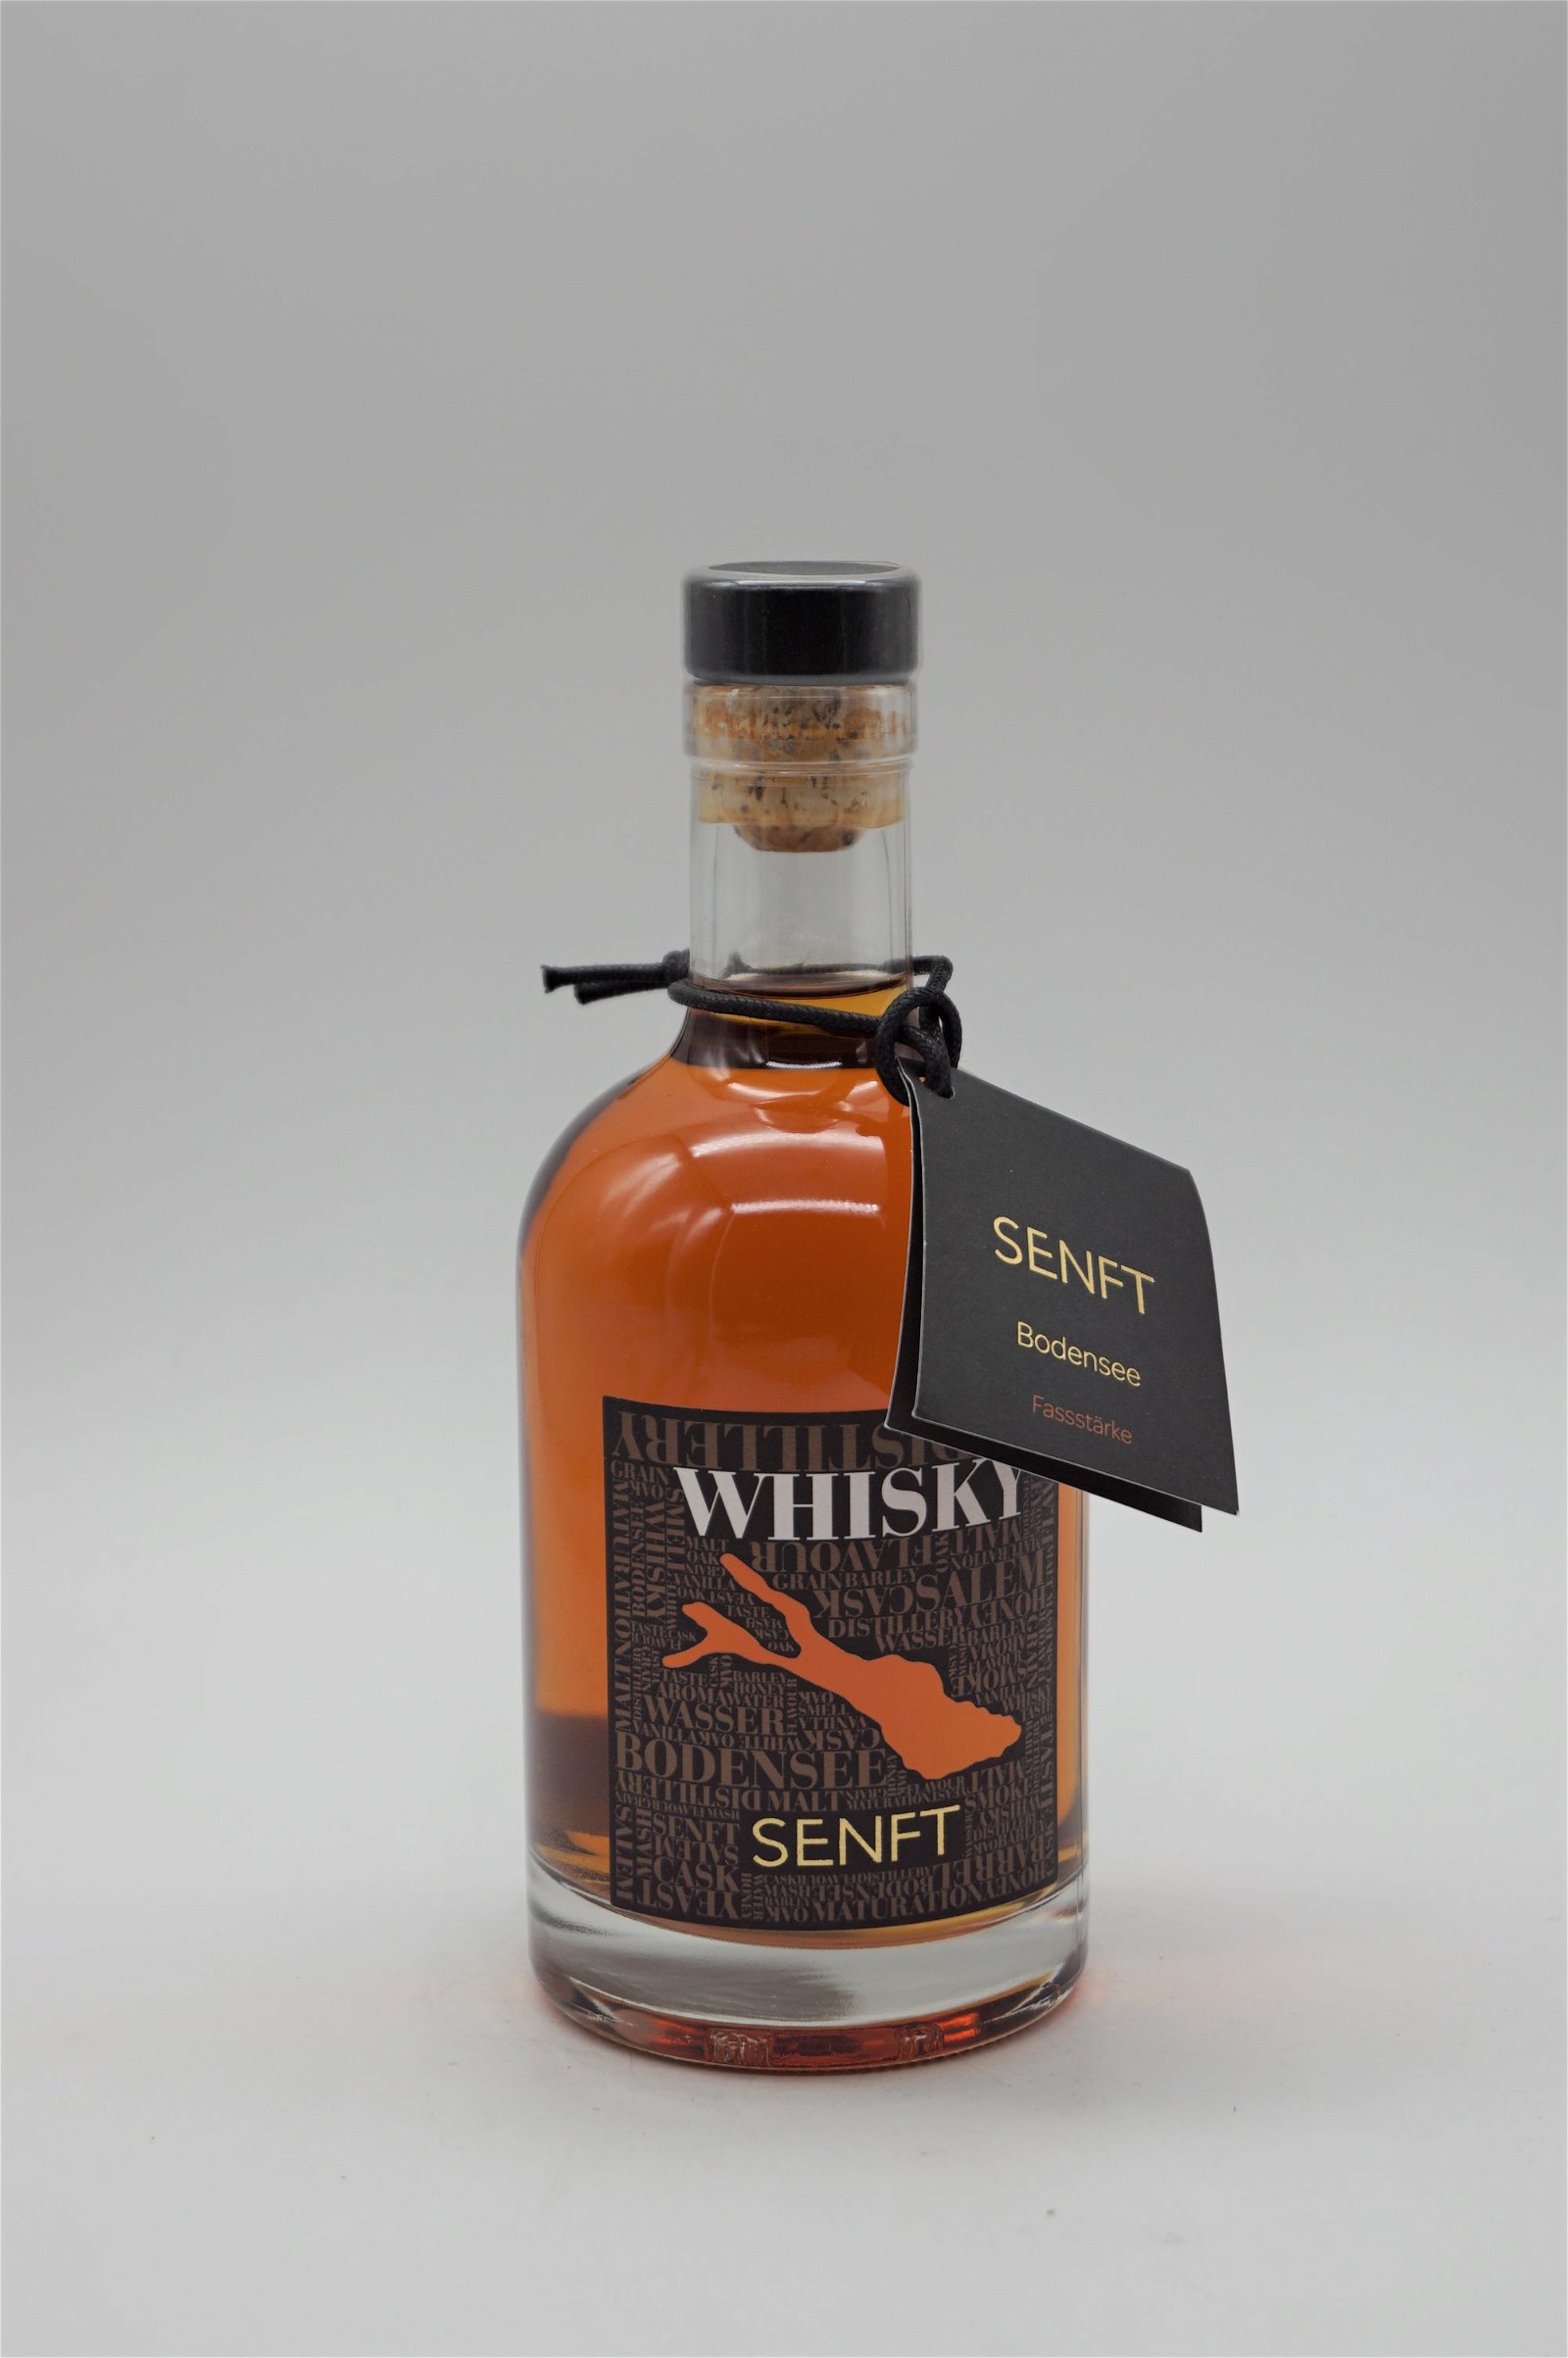 Senft Whisky 2013/2018